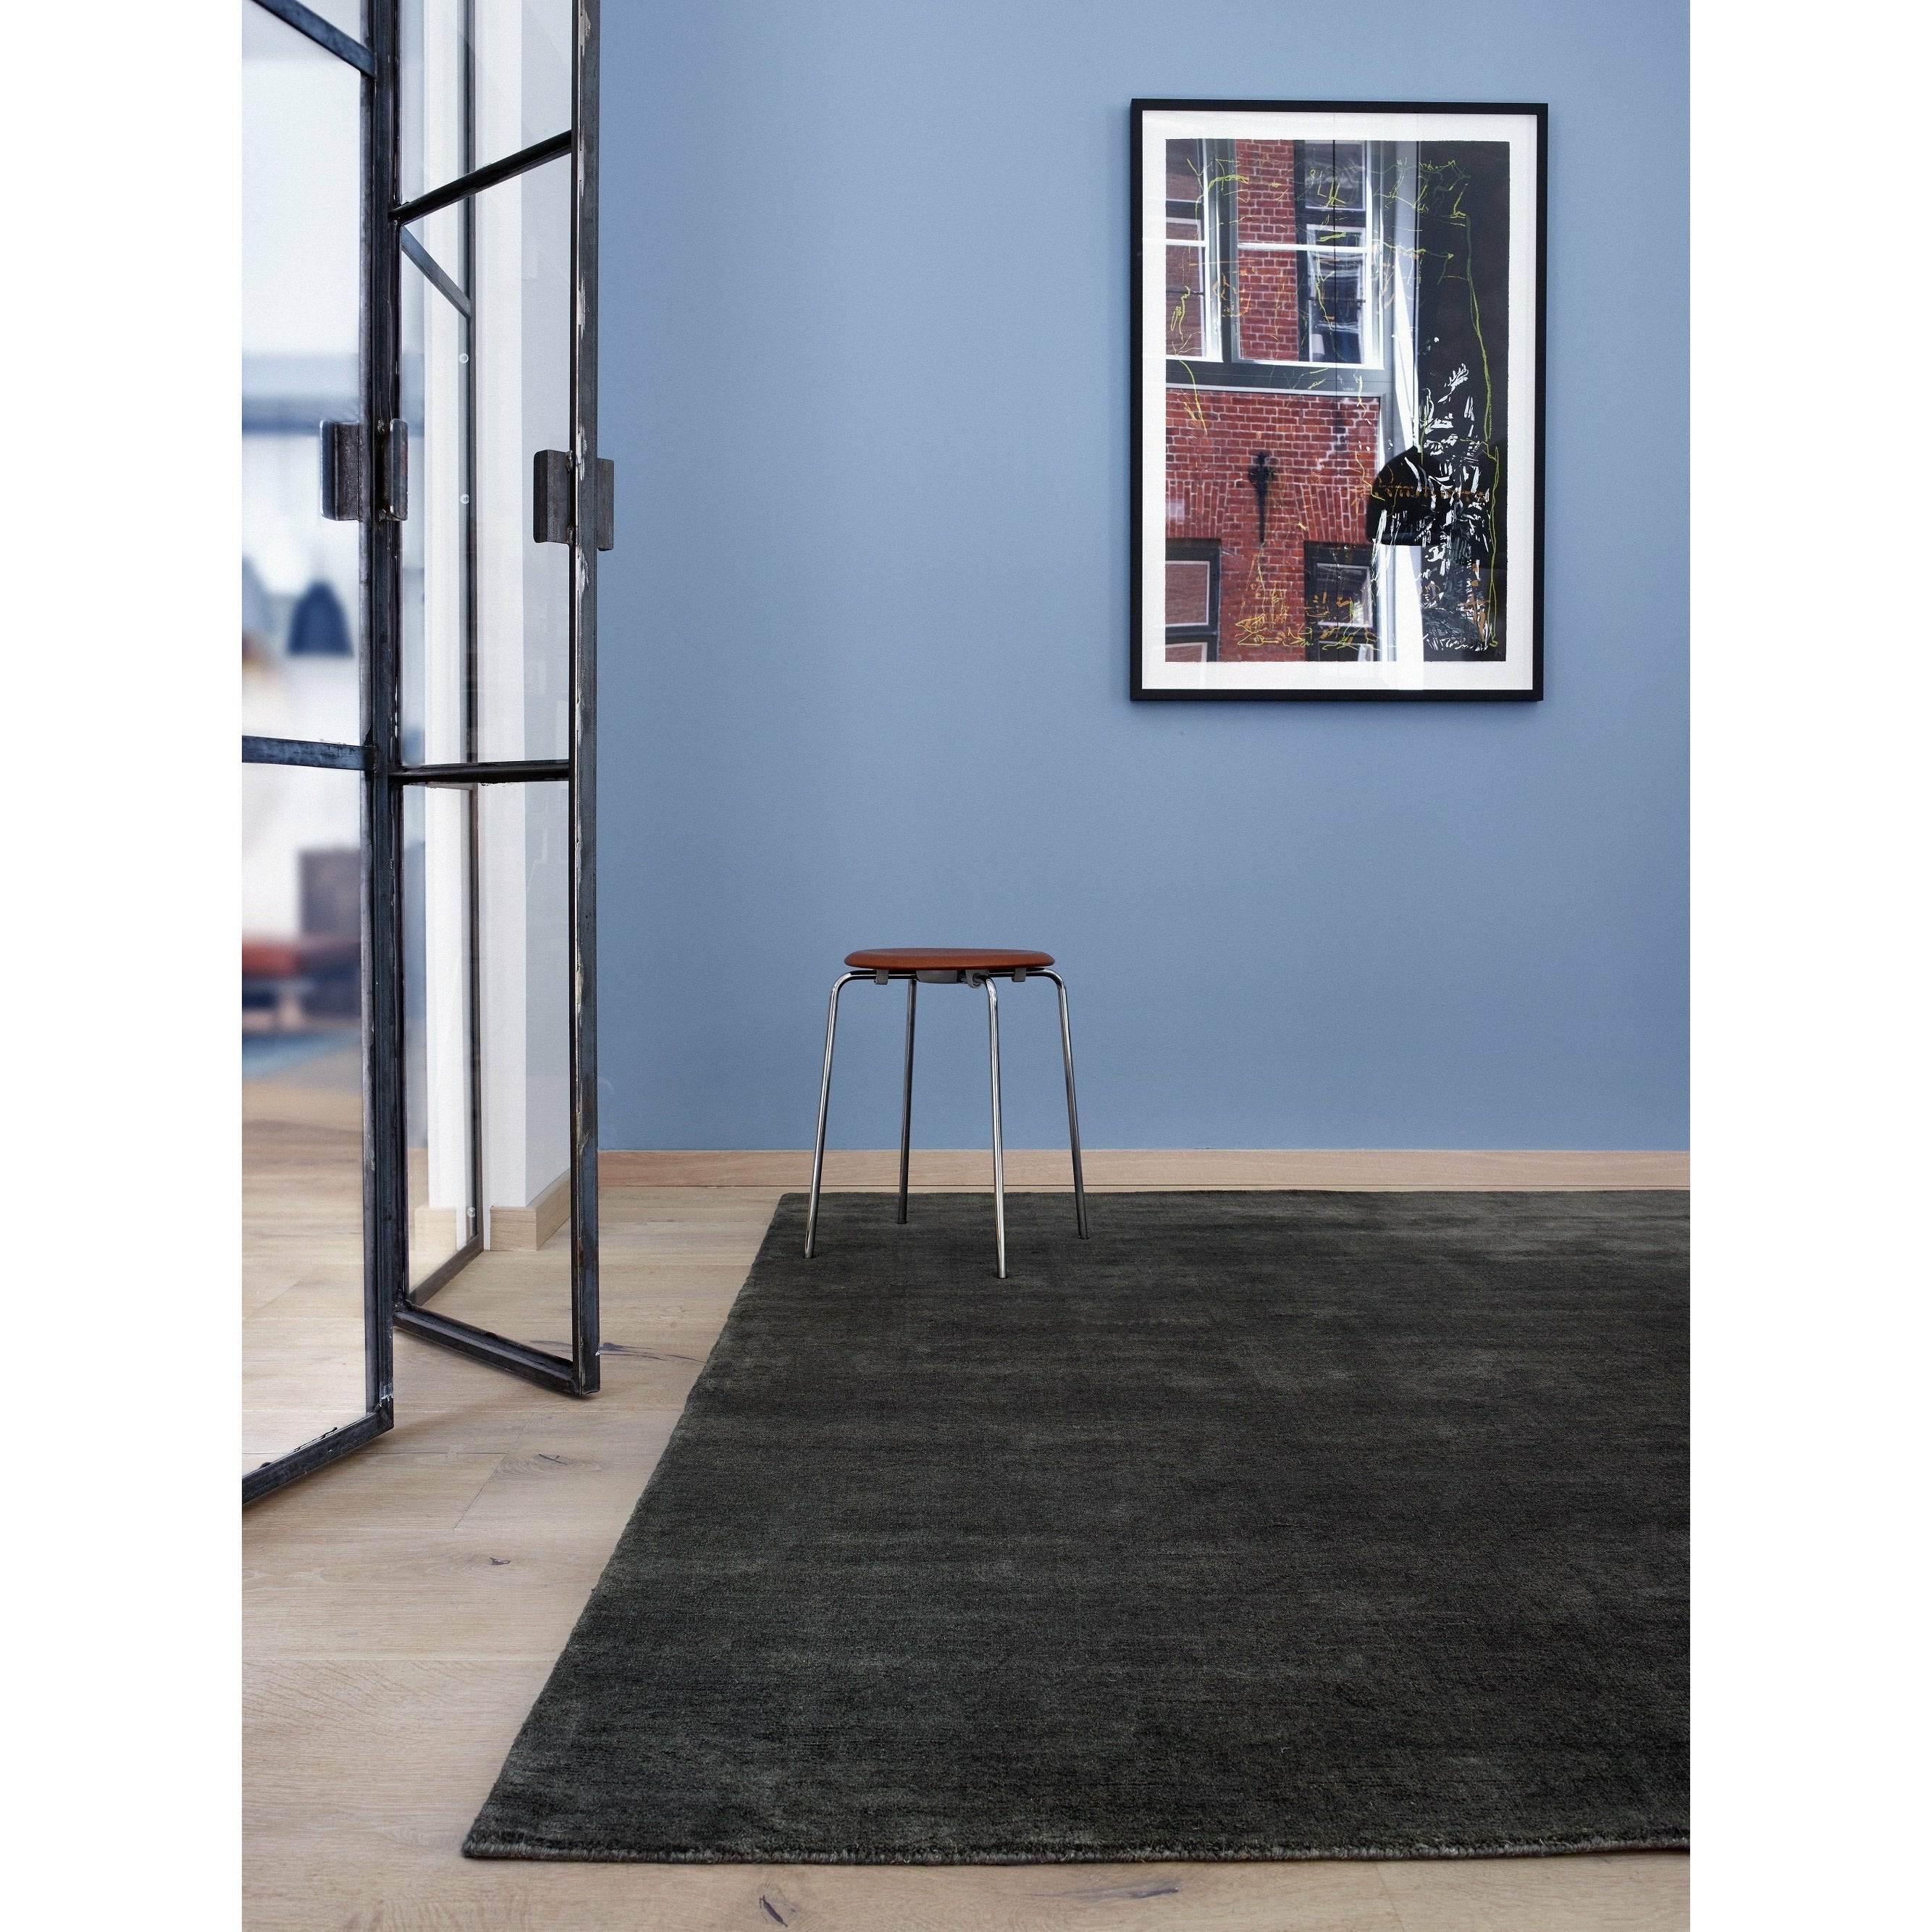 Massimo Jordtæppet trækul, 300x400 cm